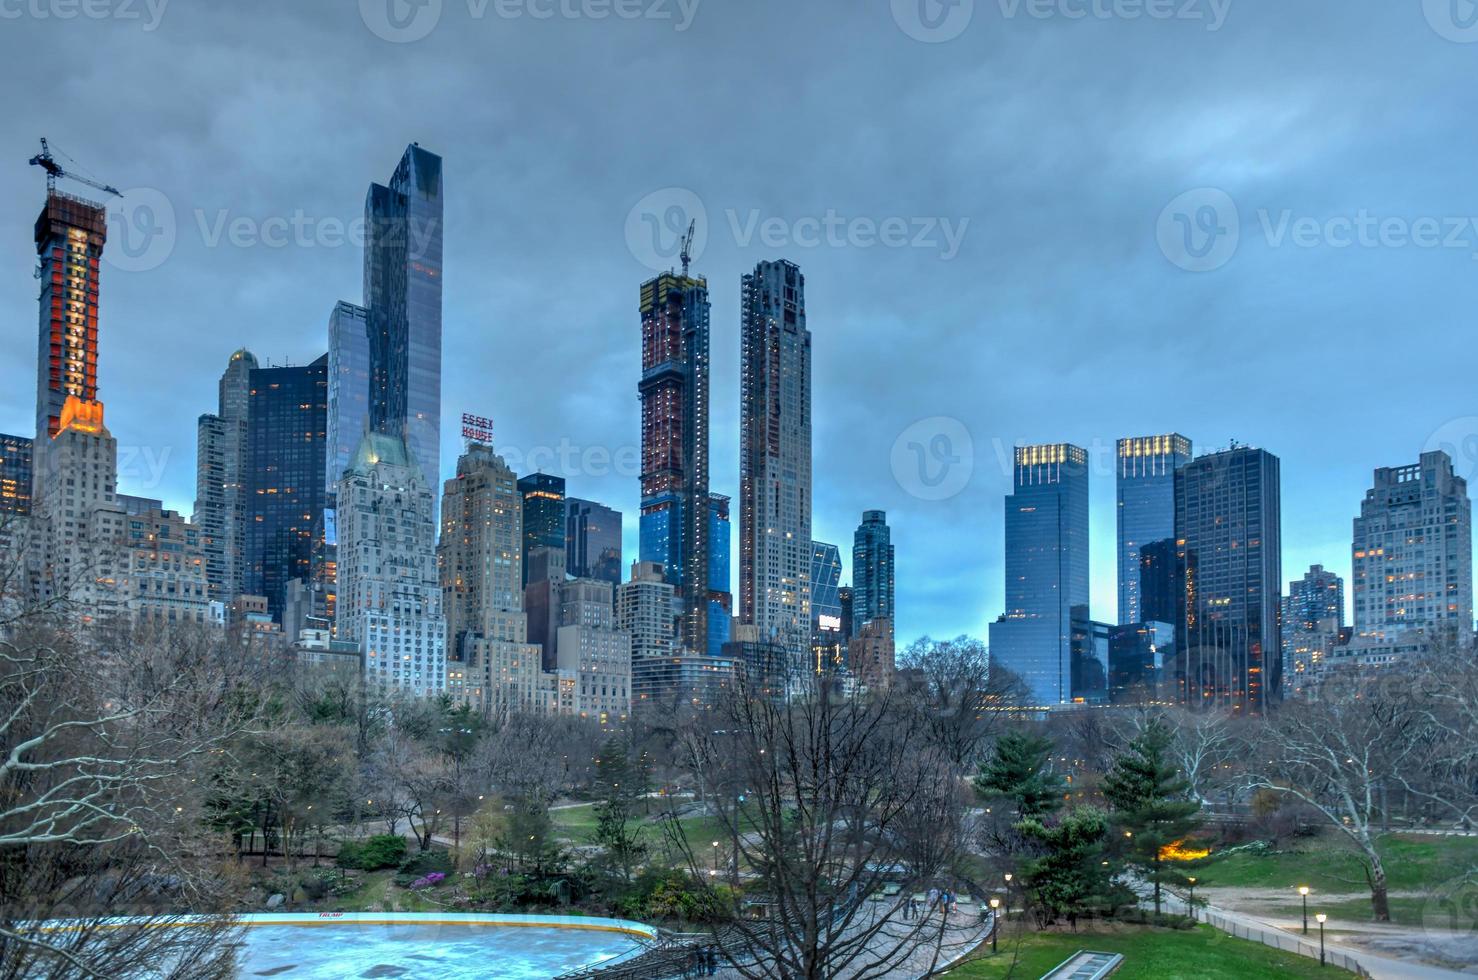 miljardair' rij visie van centraal park in Manhattan, nieuw york stad foto